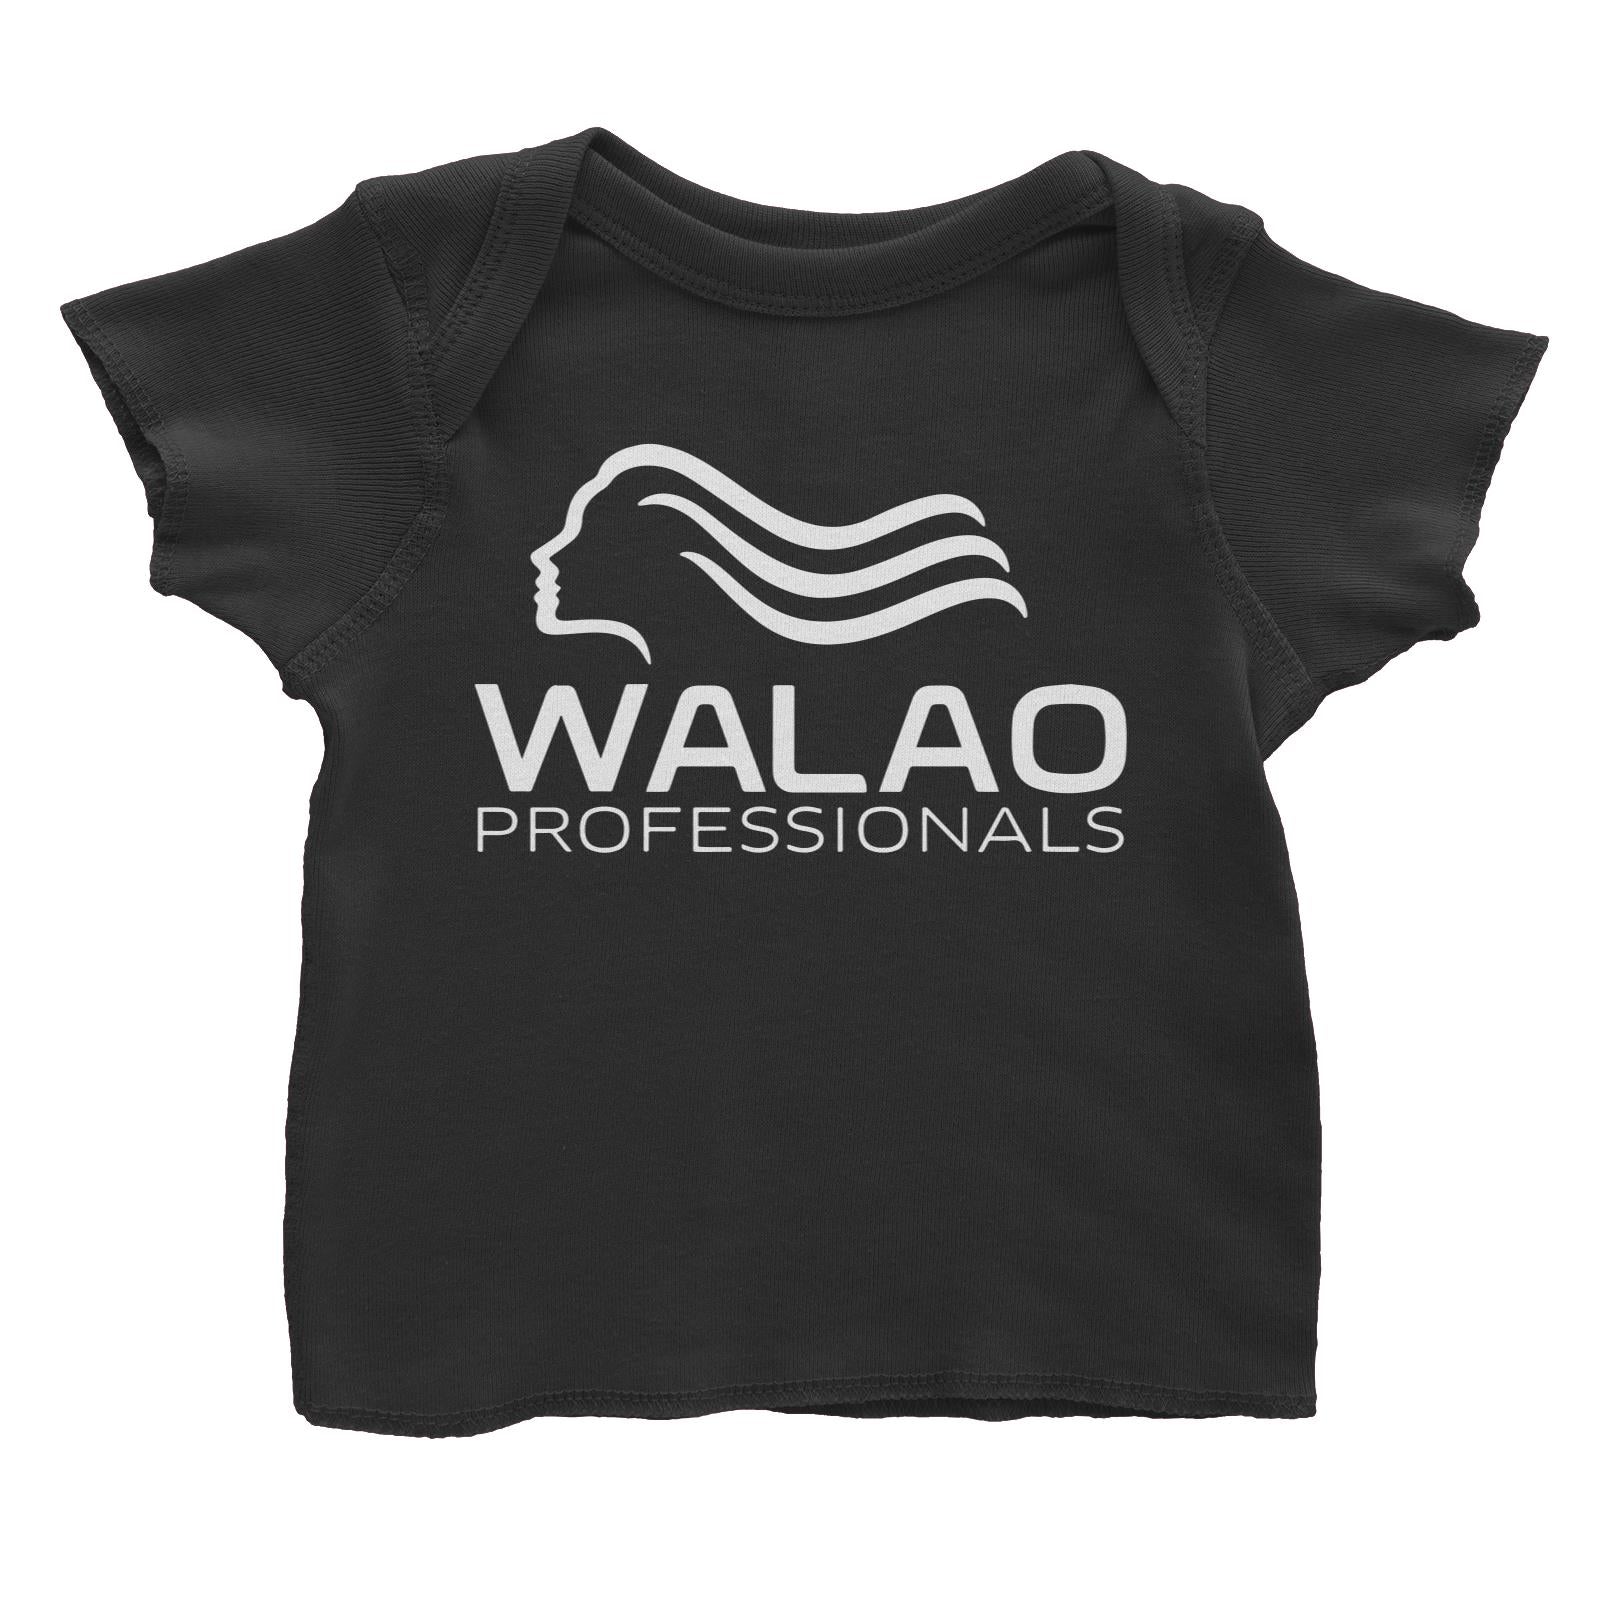 Slang Statement Walao Professional Baby FIt T-Shirt